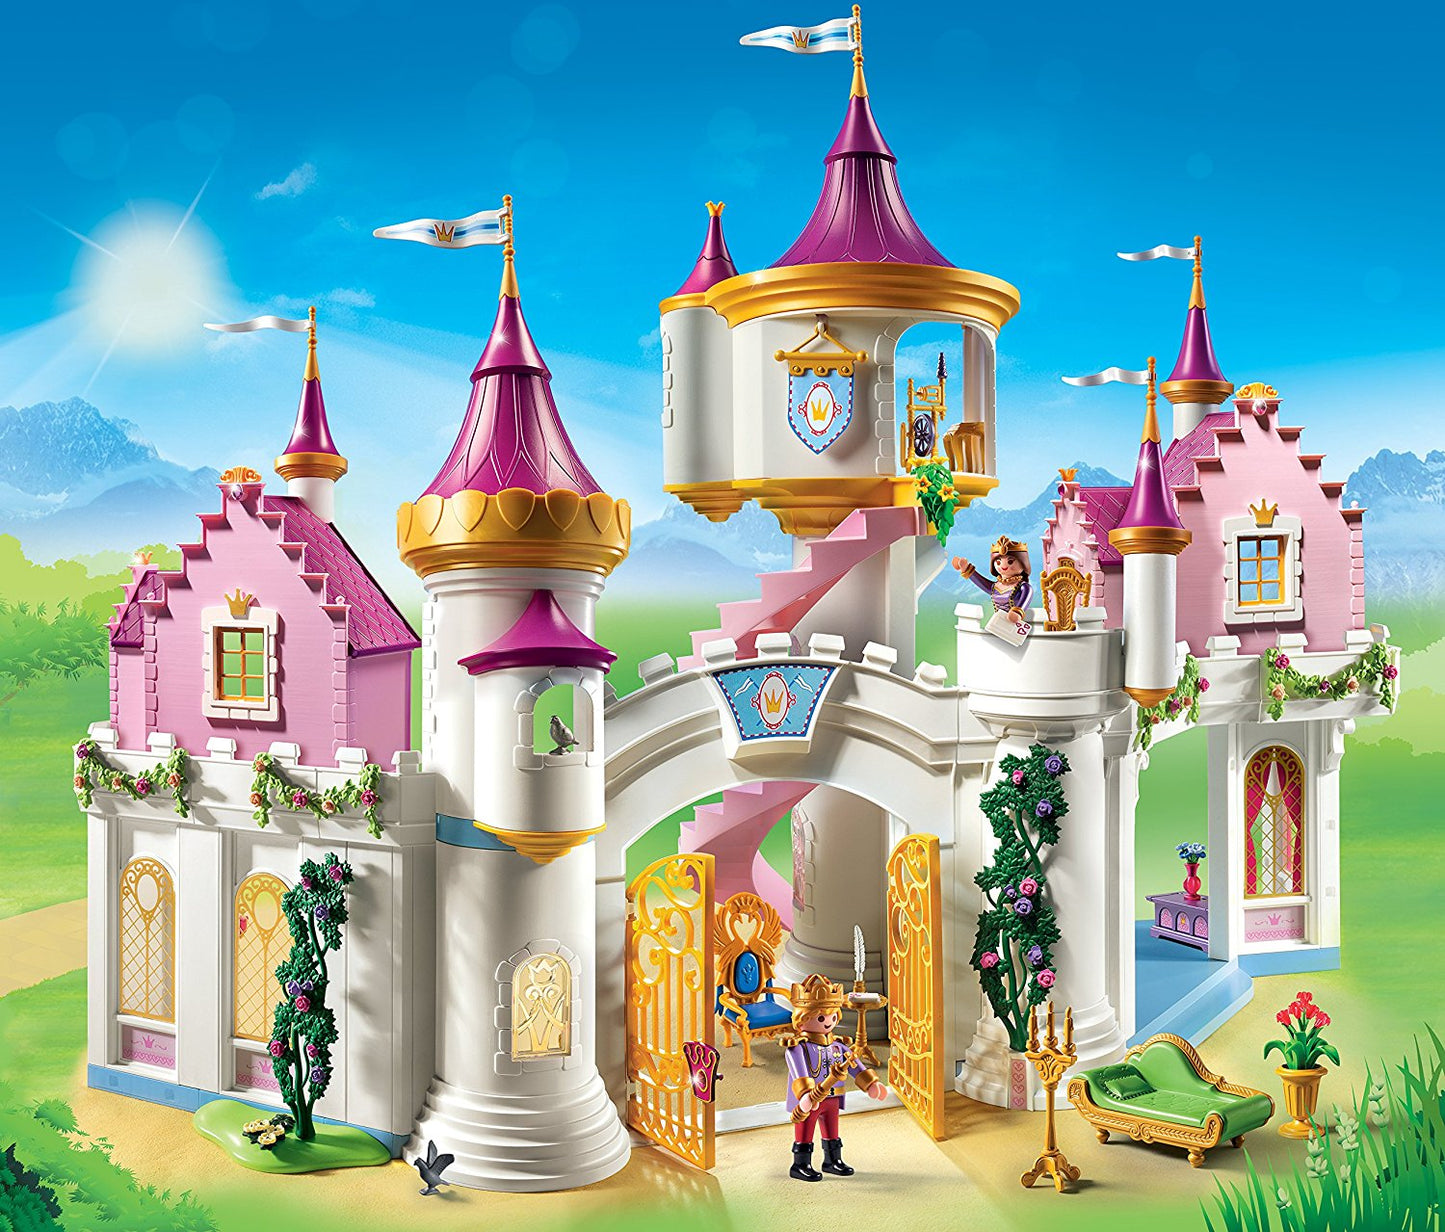 Playmobil - Princess Castle